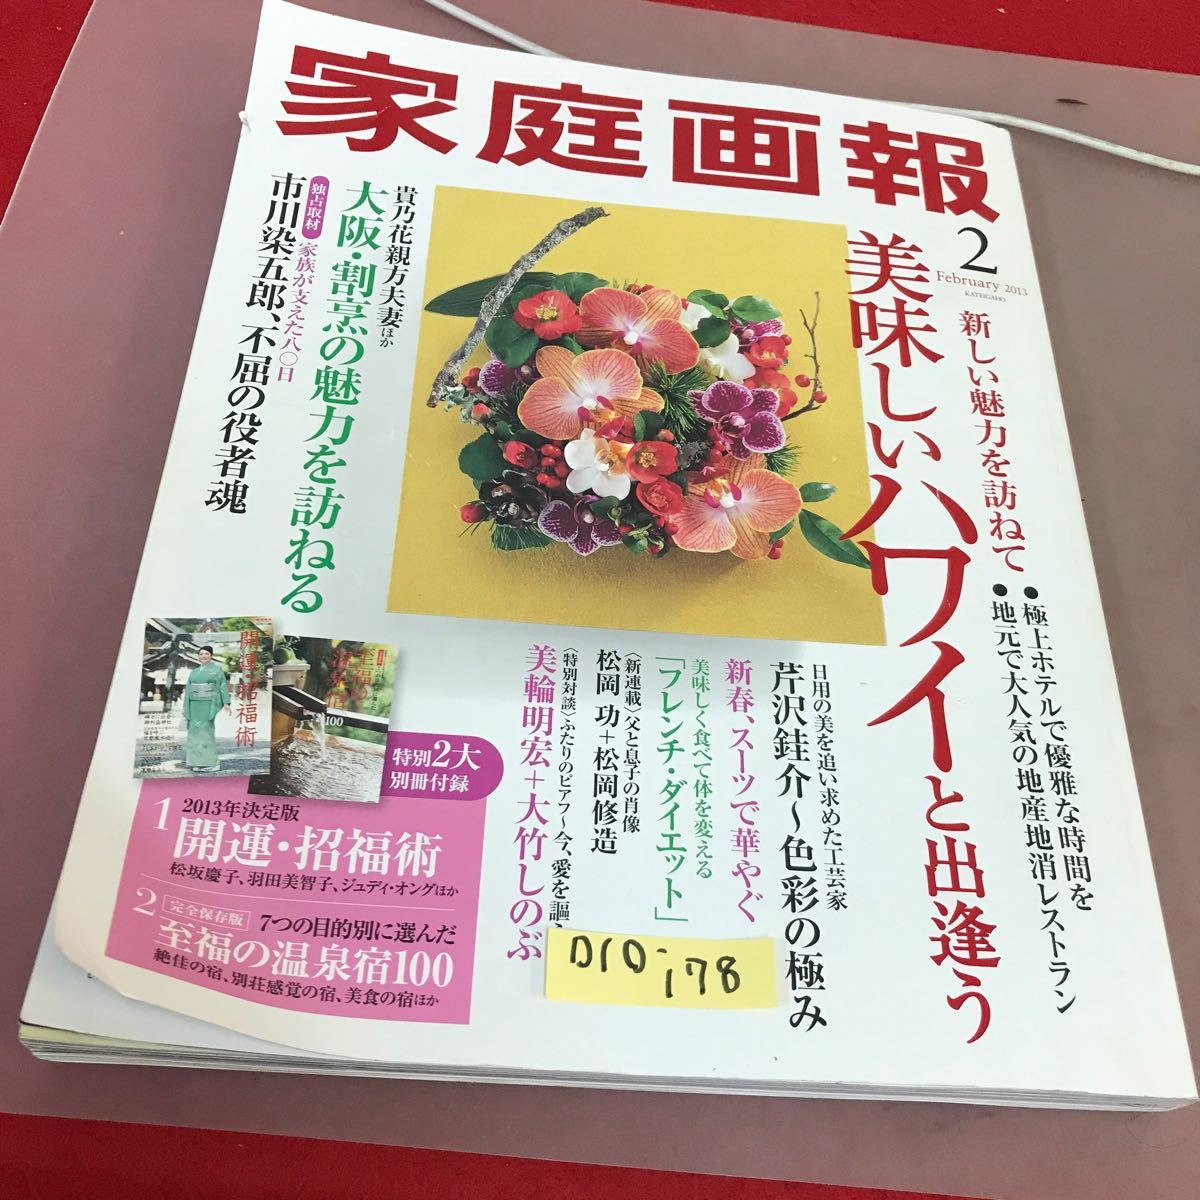 D10-178 家庭画報 2013.2 美味しいワイと出逢う 大阪・割烹の魅力を訪ねる 世界文化社